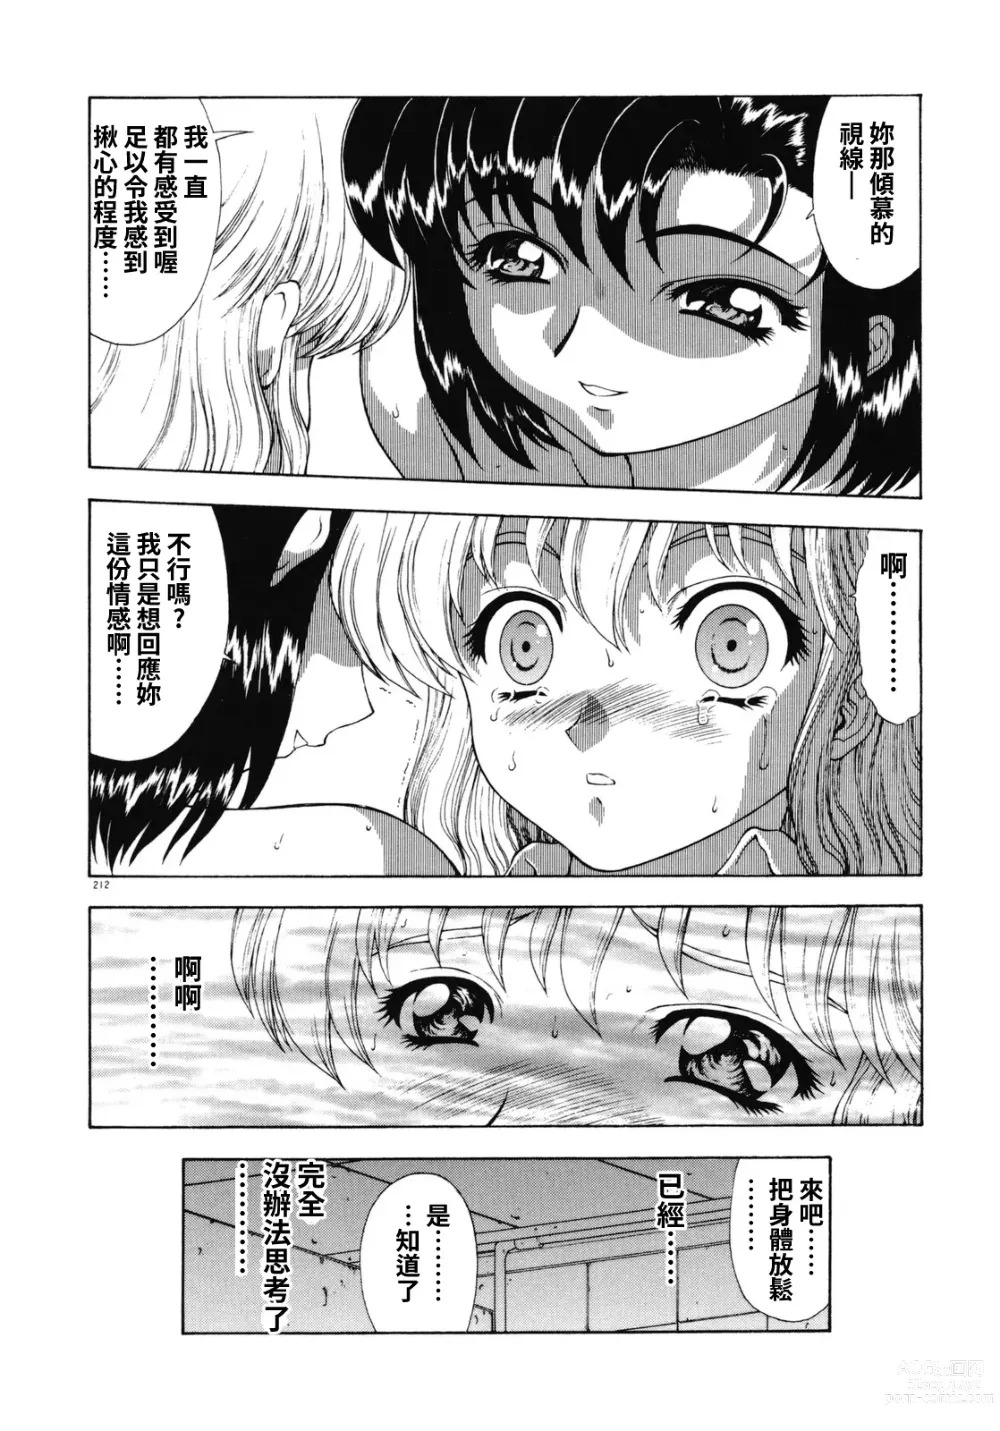 Page 44 of manga Haitoku no Kanata Ch. 9-11